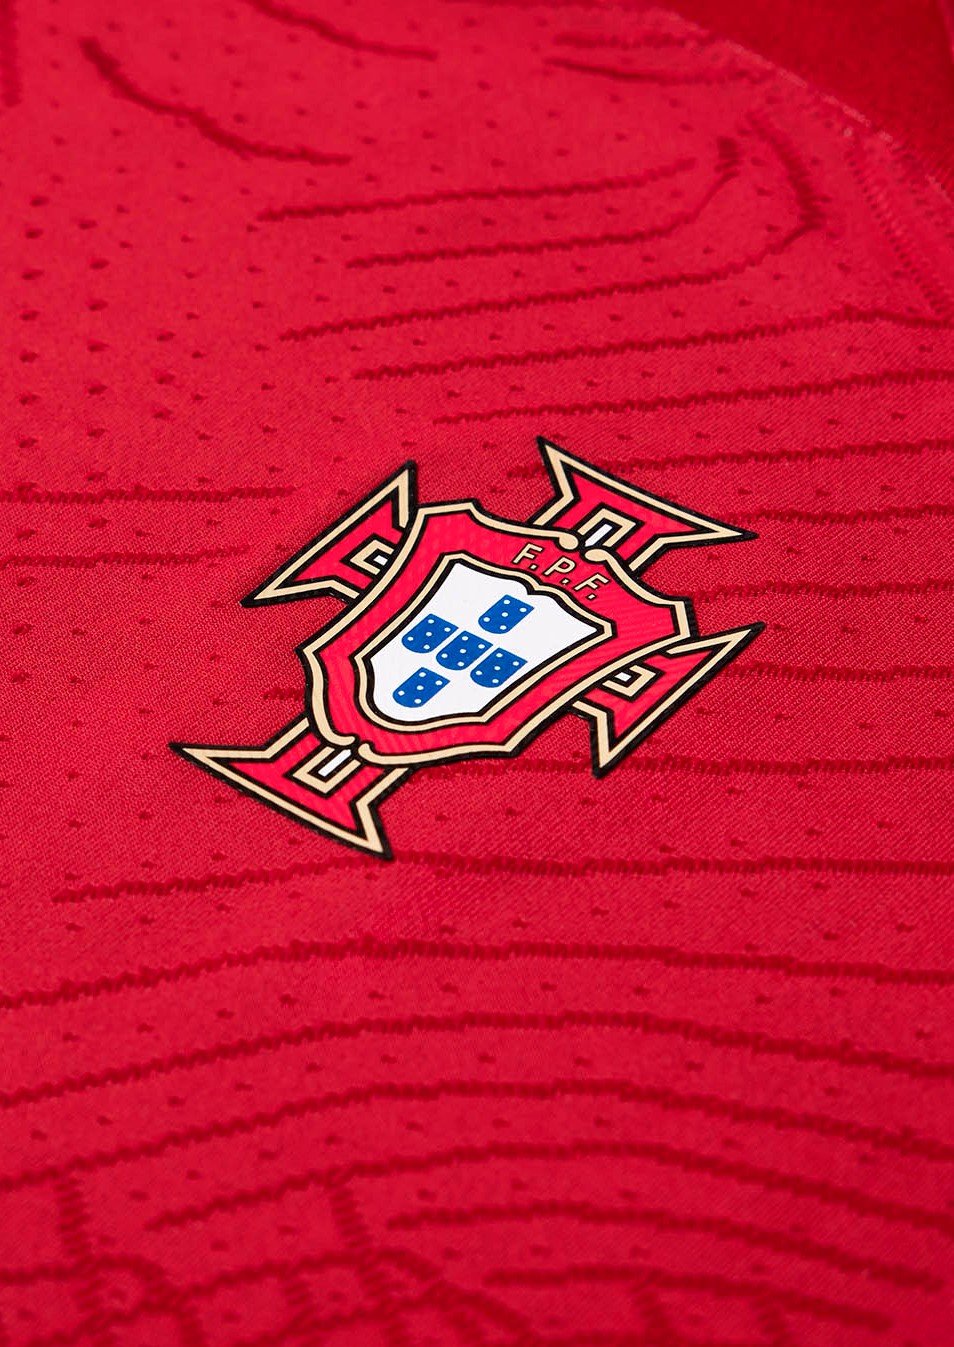 Portugal - 1 título (2016) Reprodução